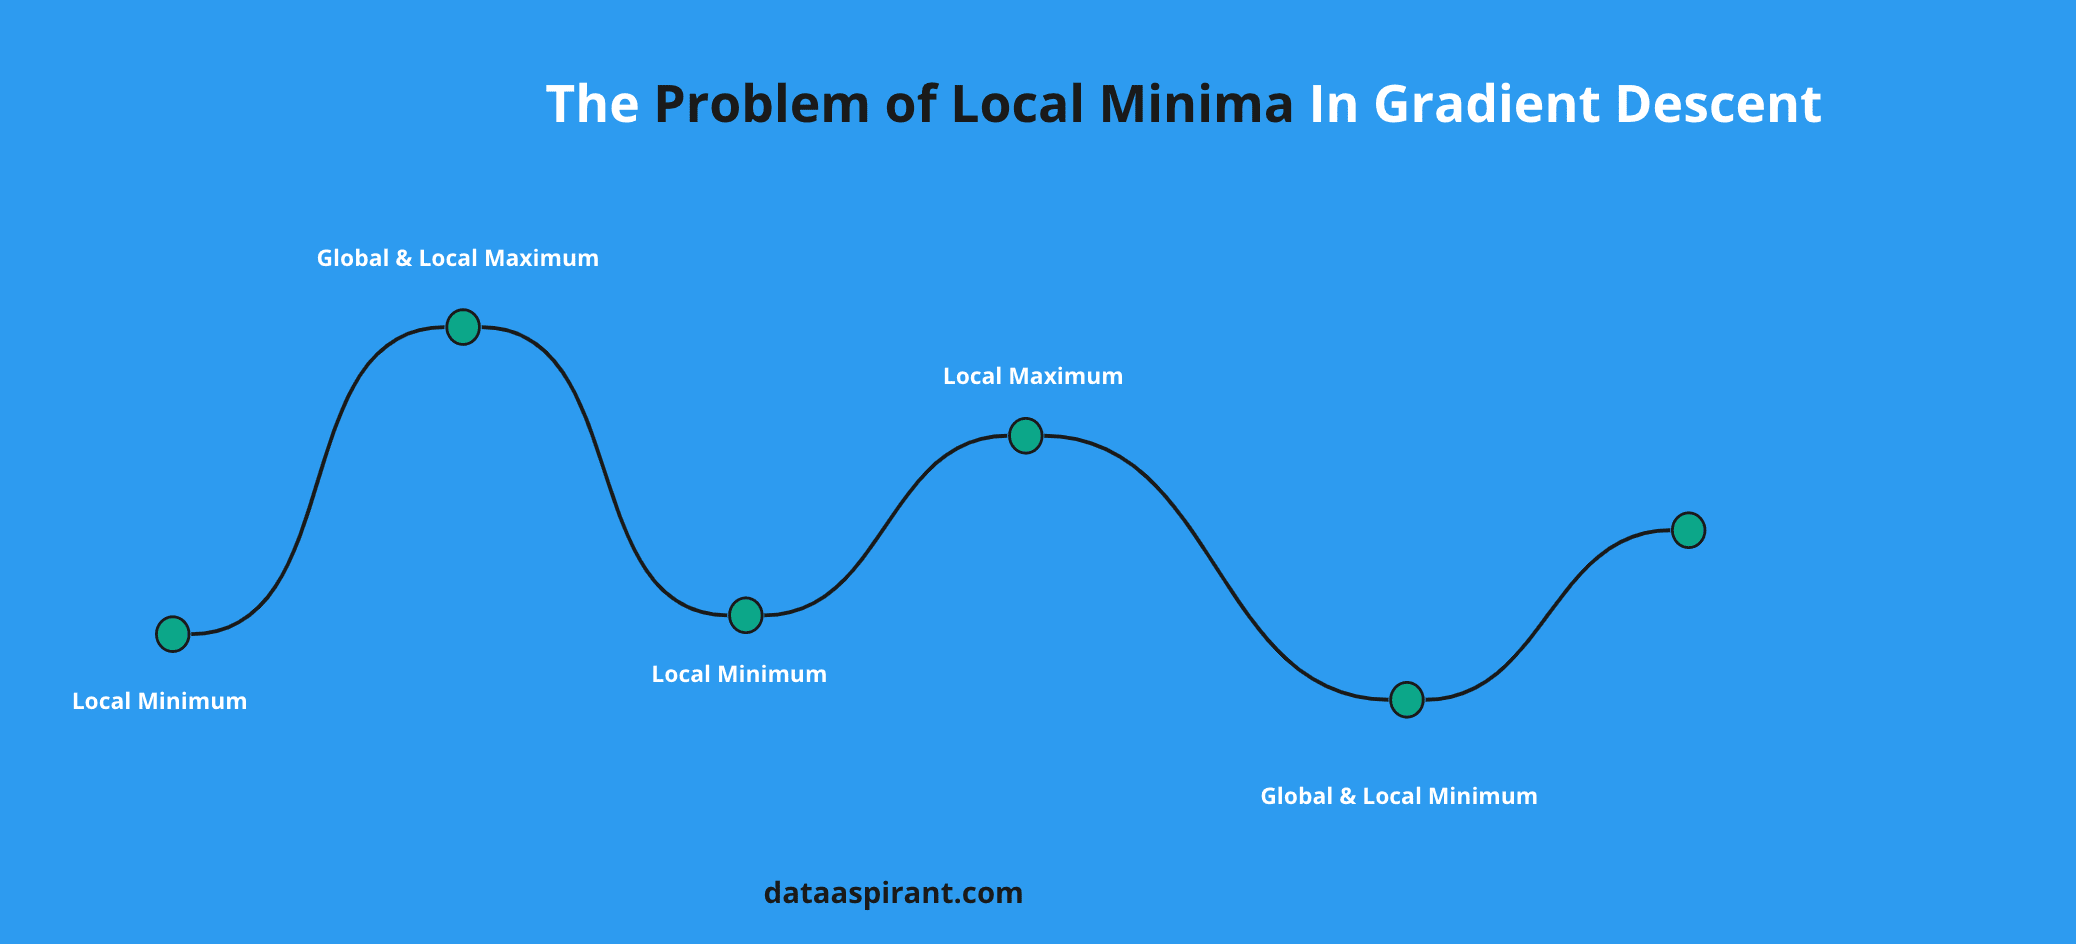 The problem of local minima in Gradient Descent